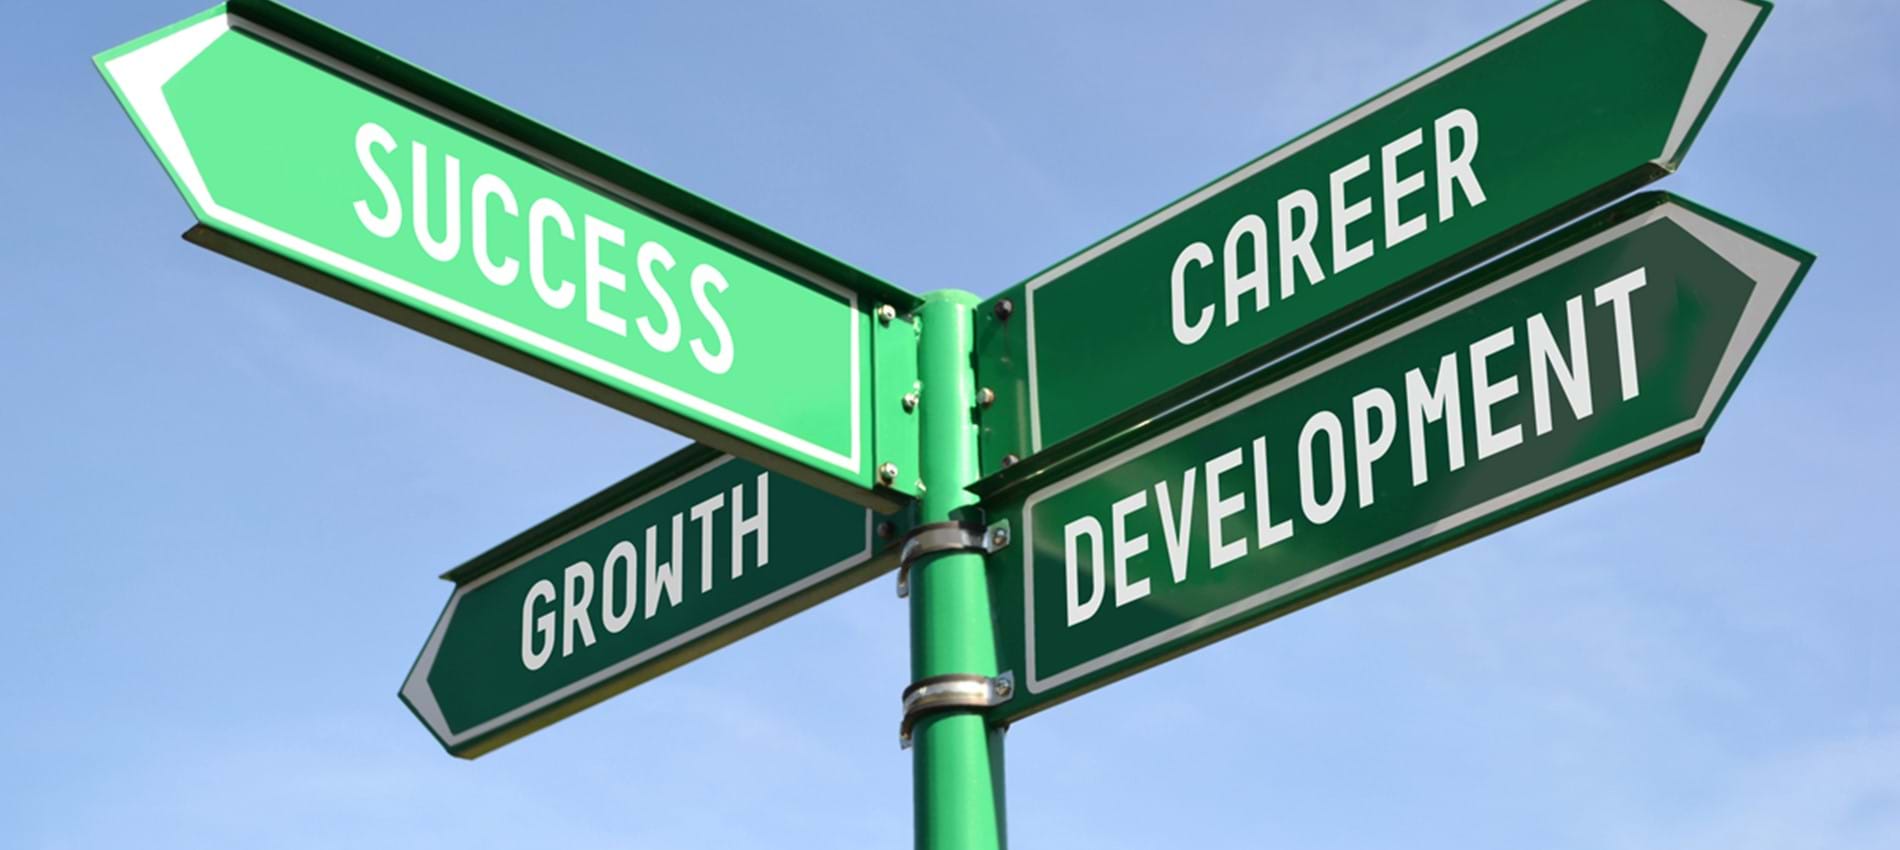 nojs Success, growth, career development signs